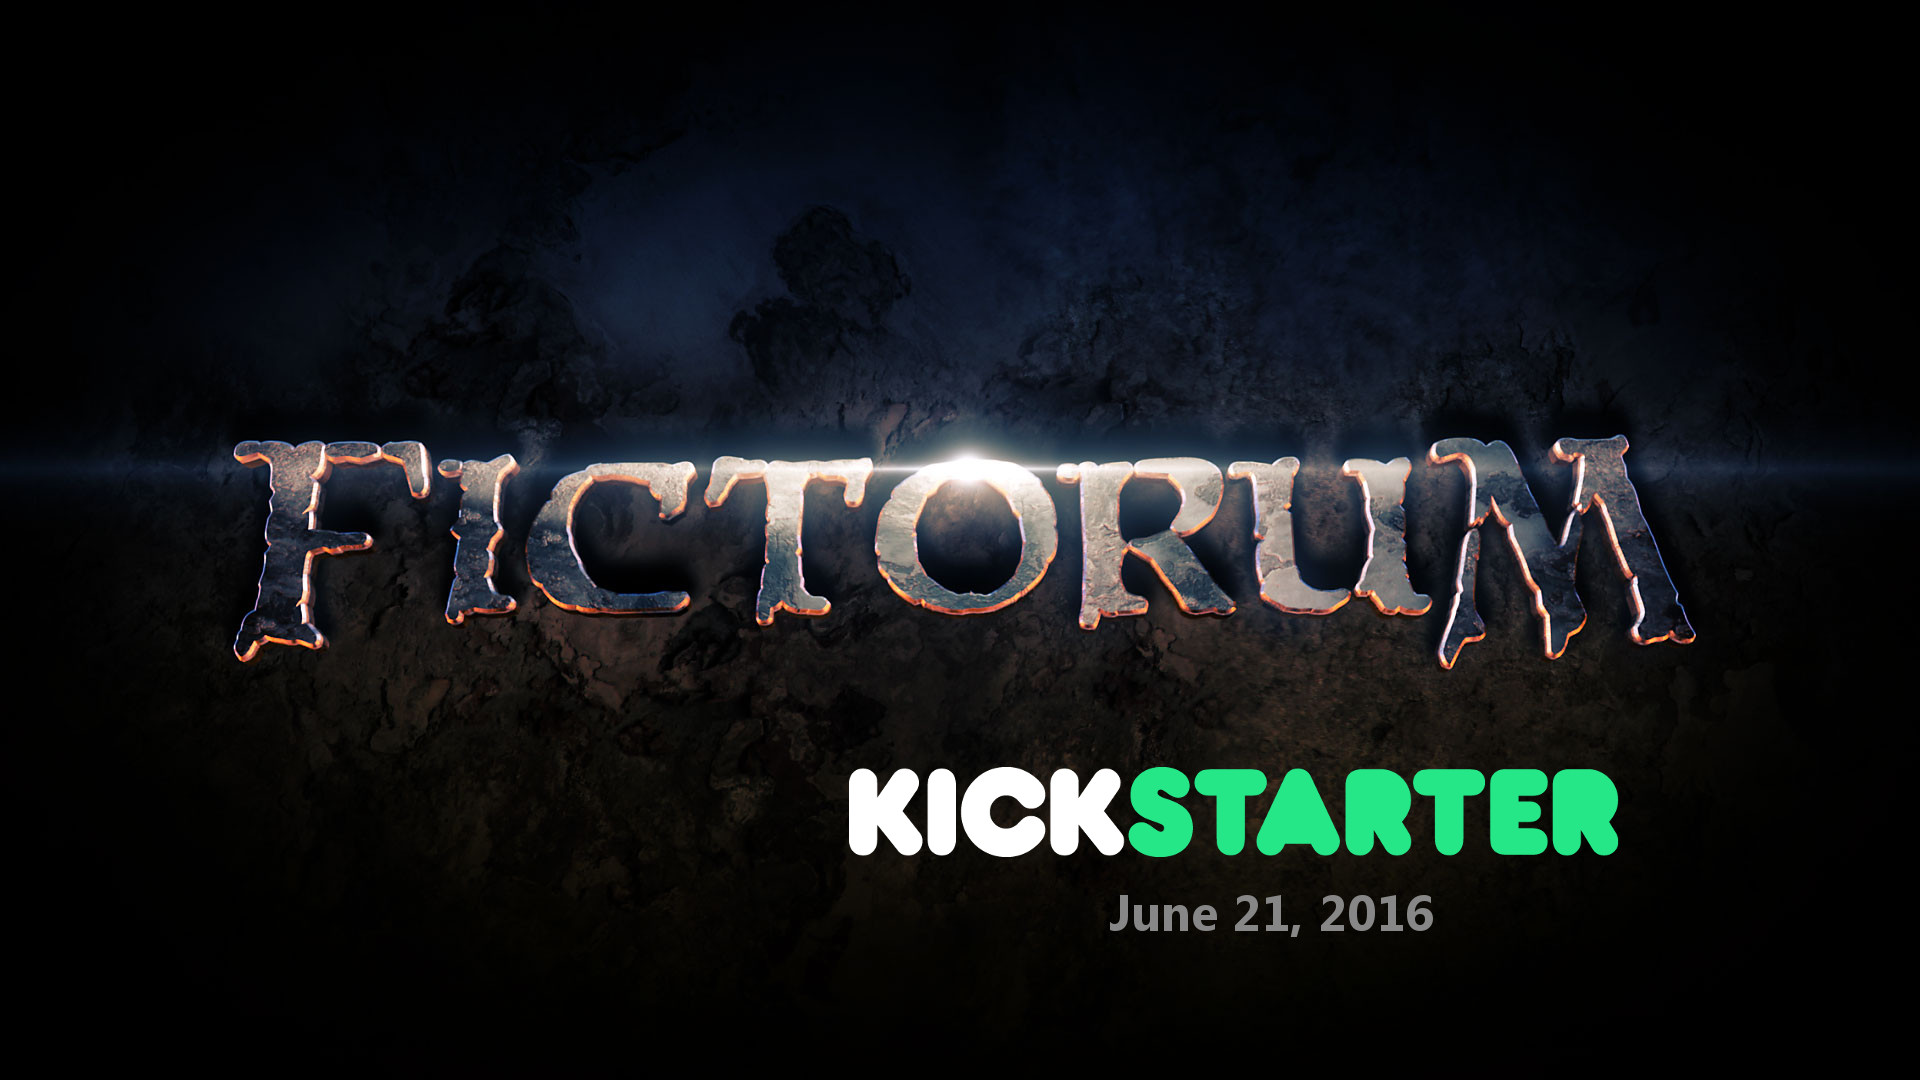 Fictorum Wizard Video Game Kickstarter